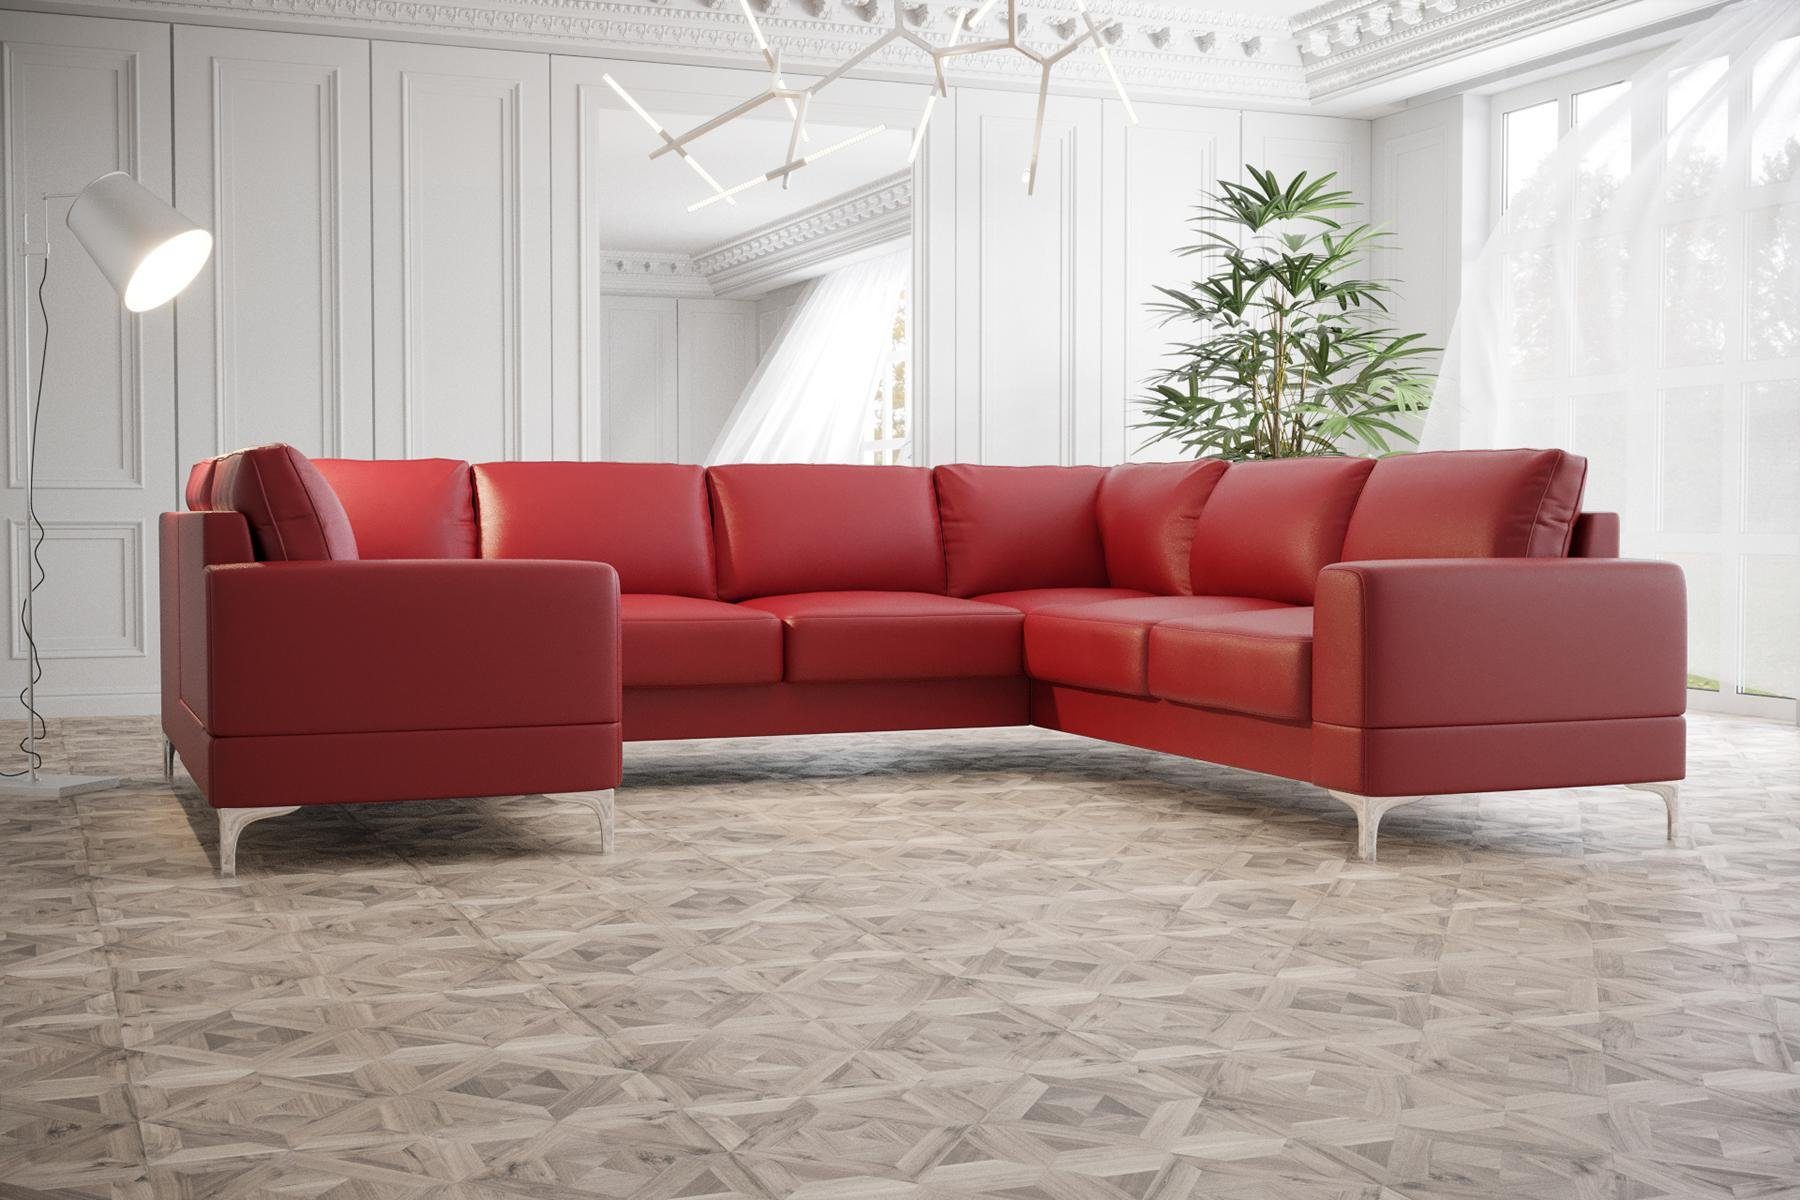 JVmoebel Ecksofa Wohnlandschaft Polsterecke Sofa Couch Sofas Neu, Made in Europe Rot